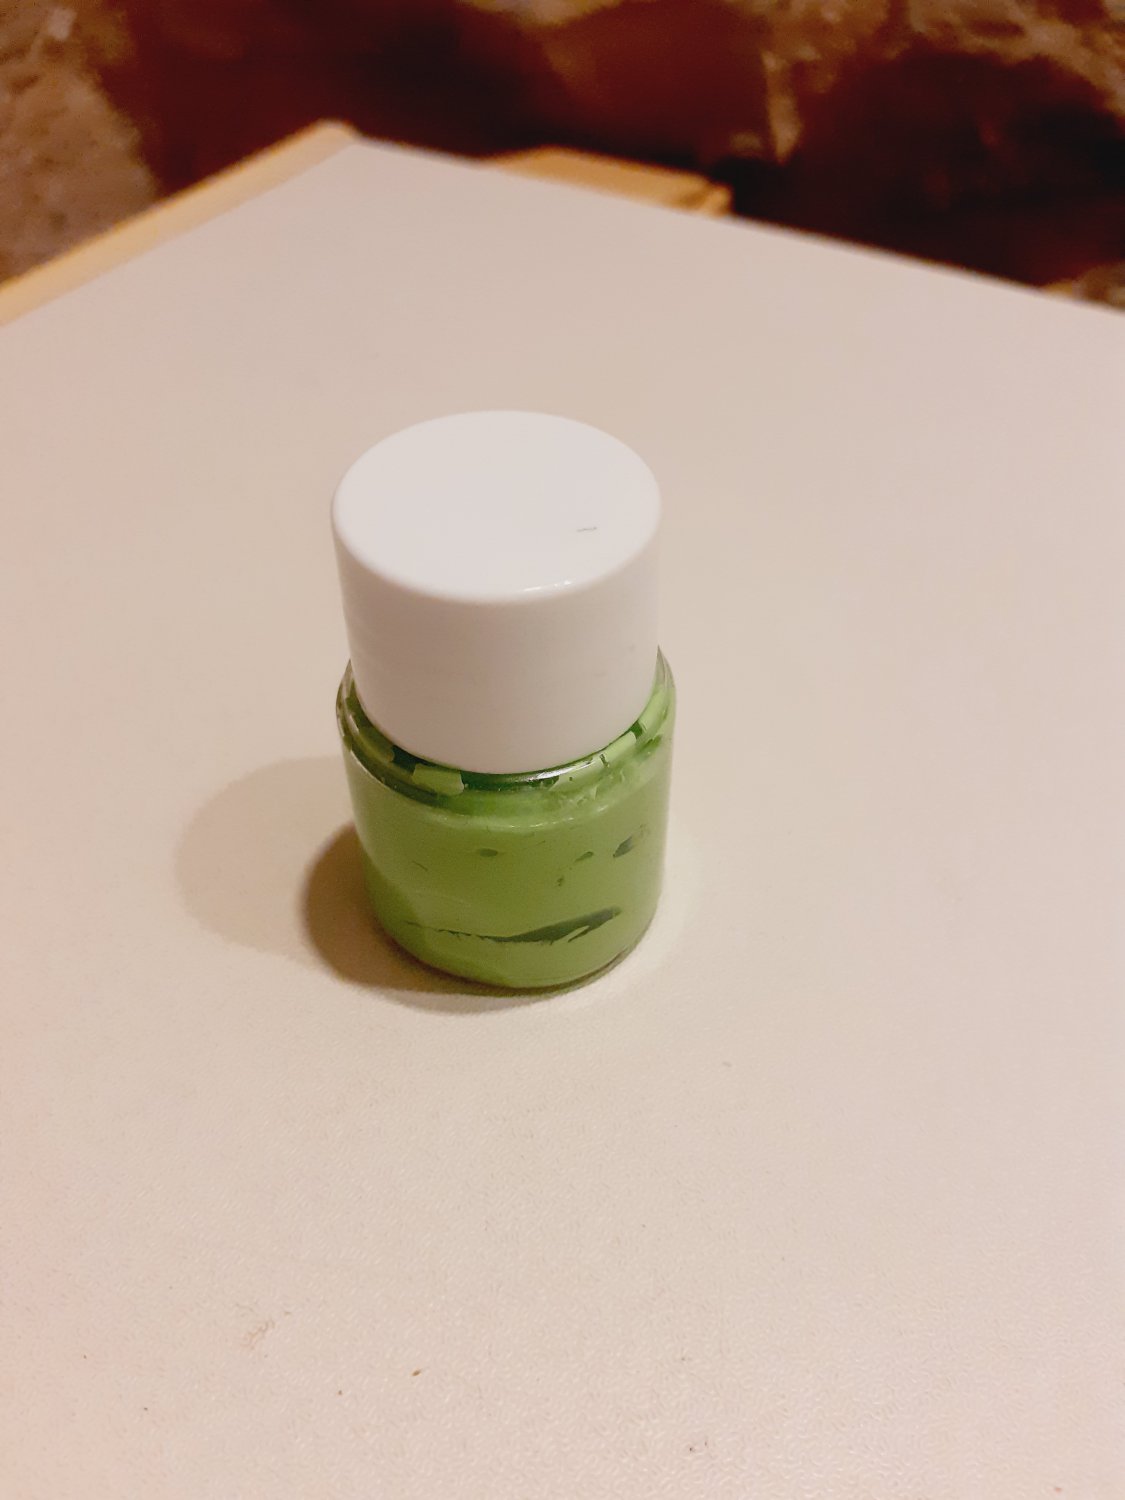 green porcelain paint 20 ml